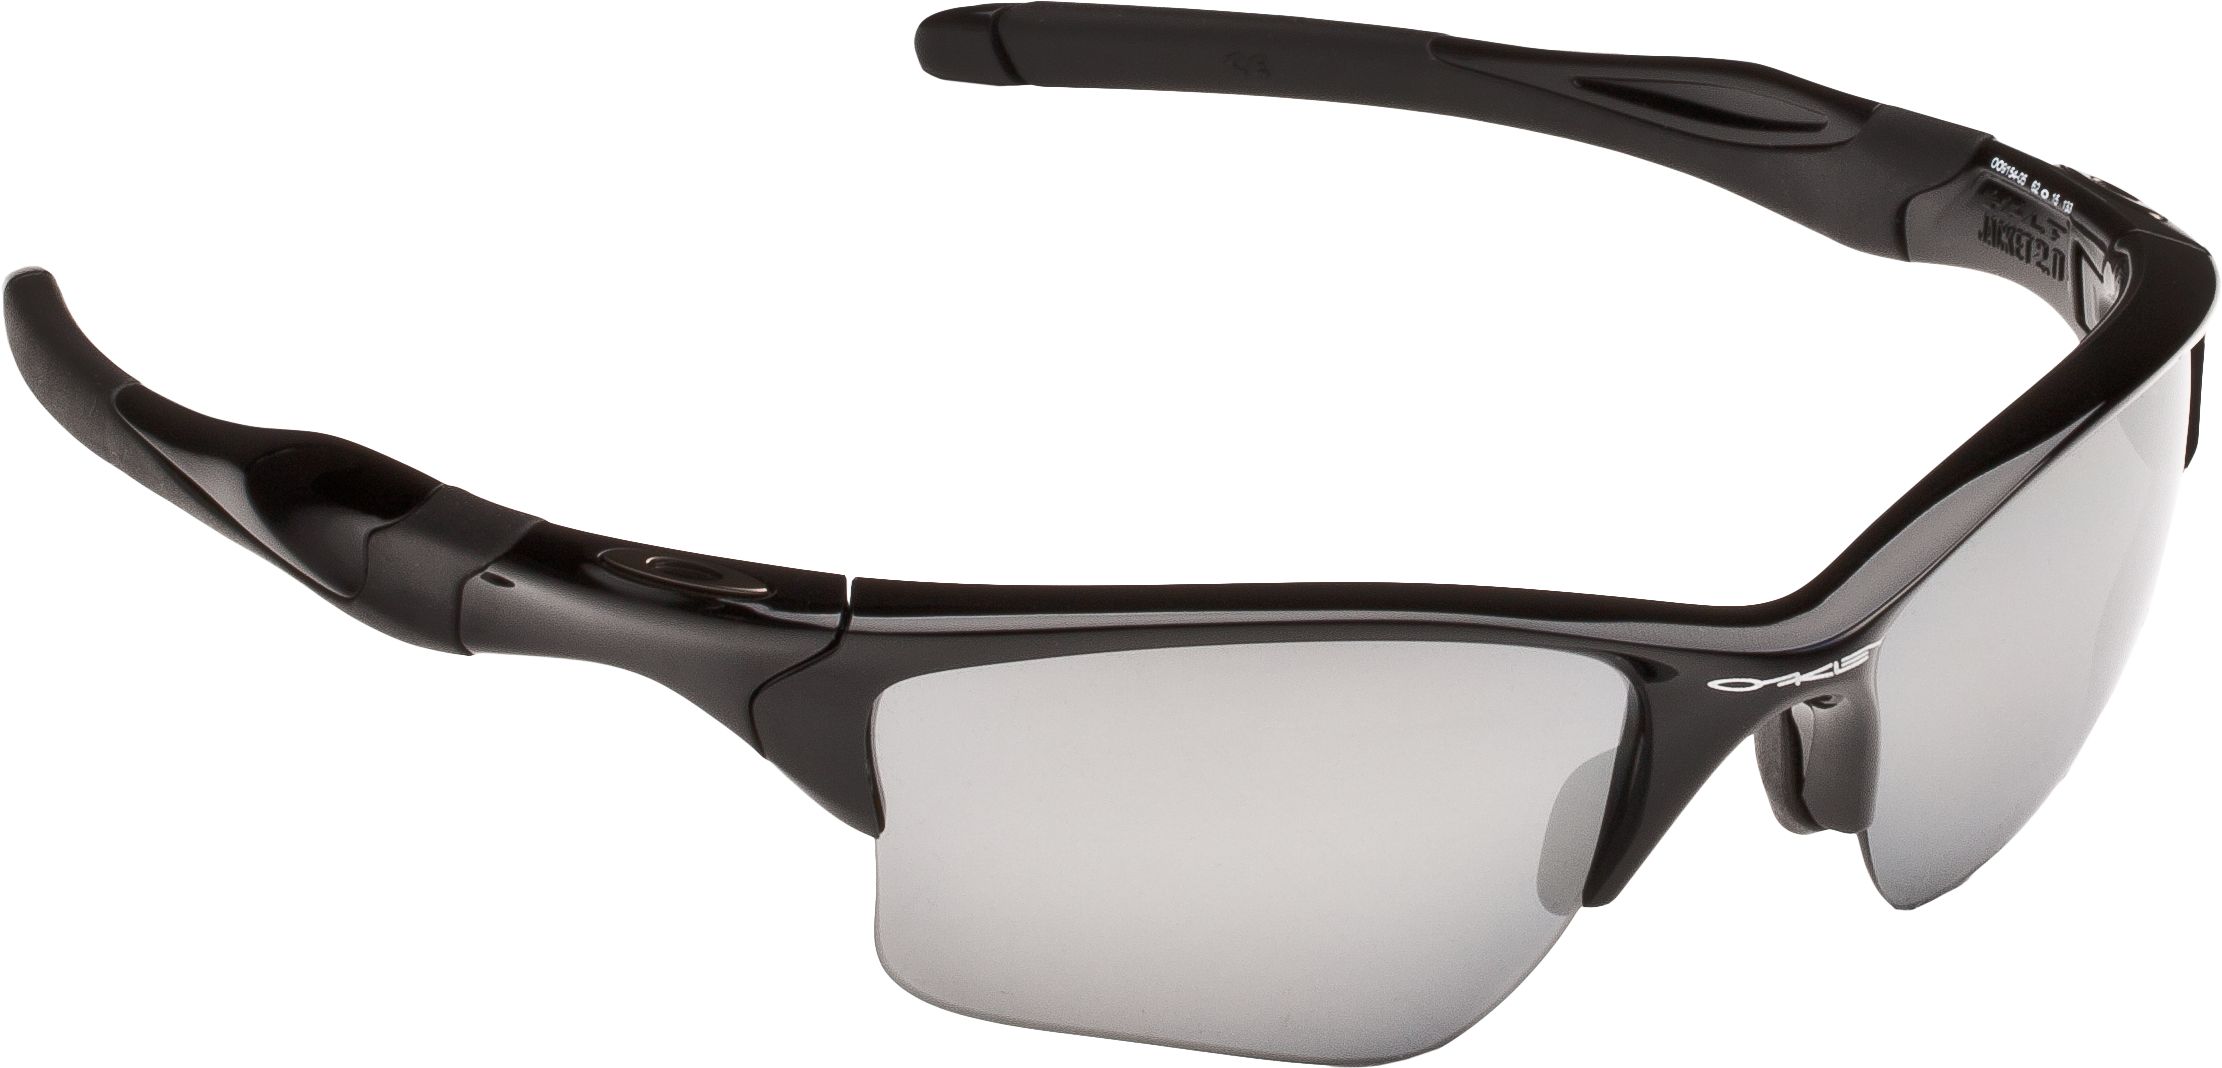 Oakley Half Jacket 2.0 XL Sunglasses | Unisex Sunglasses